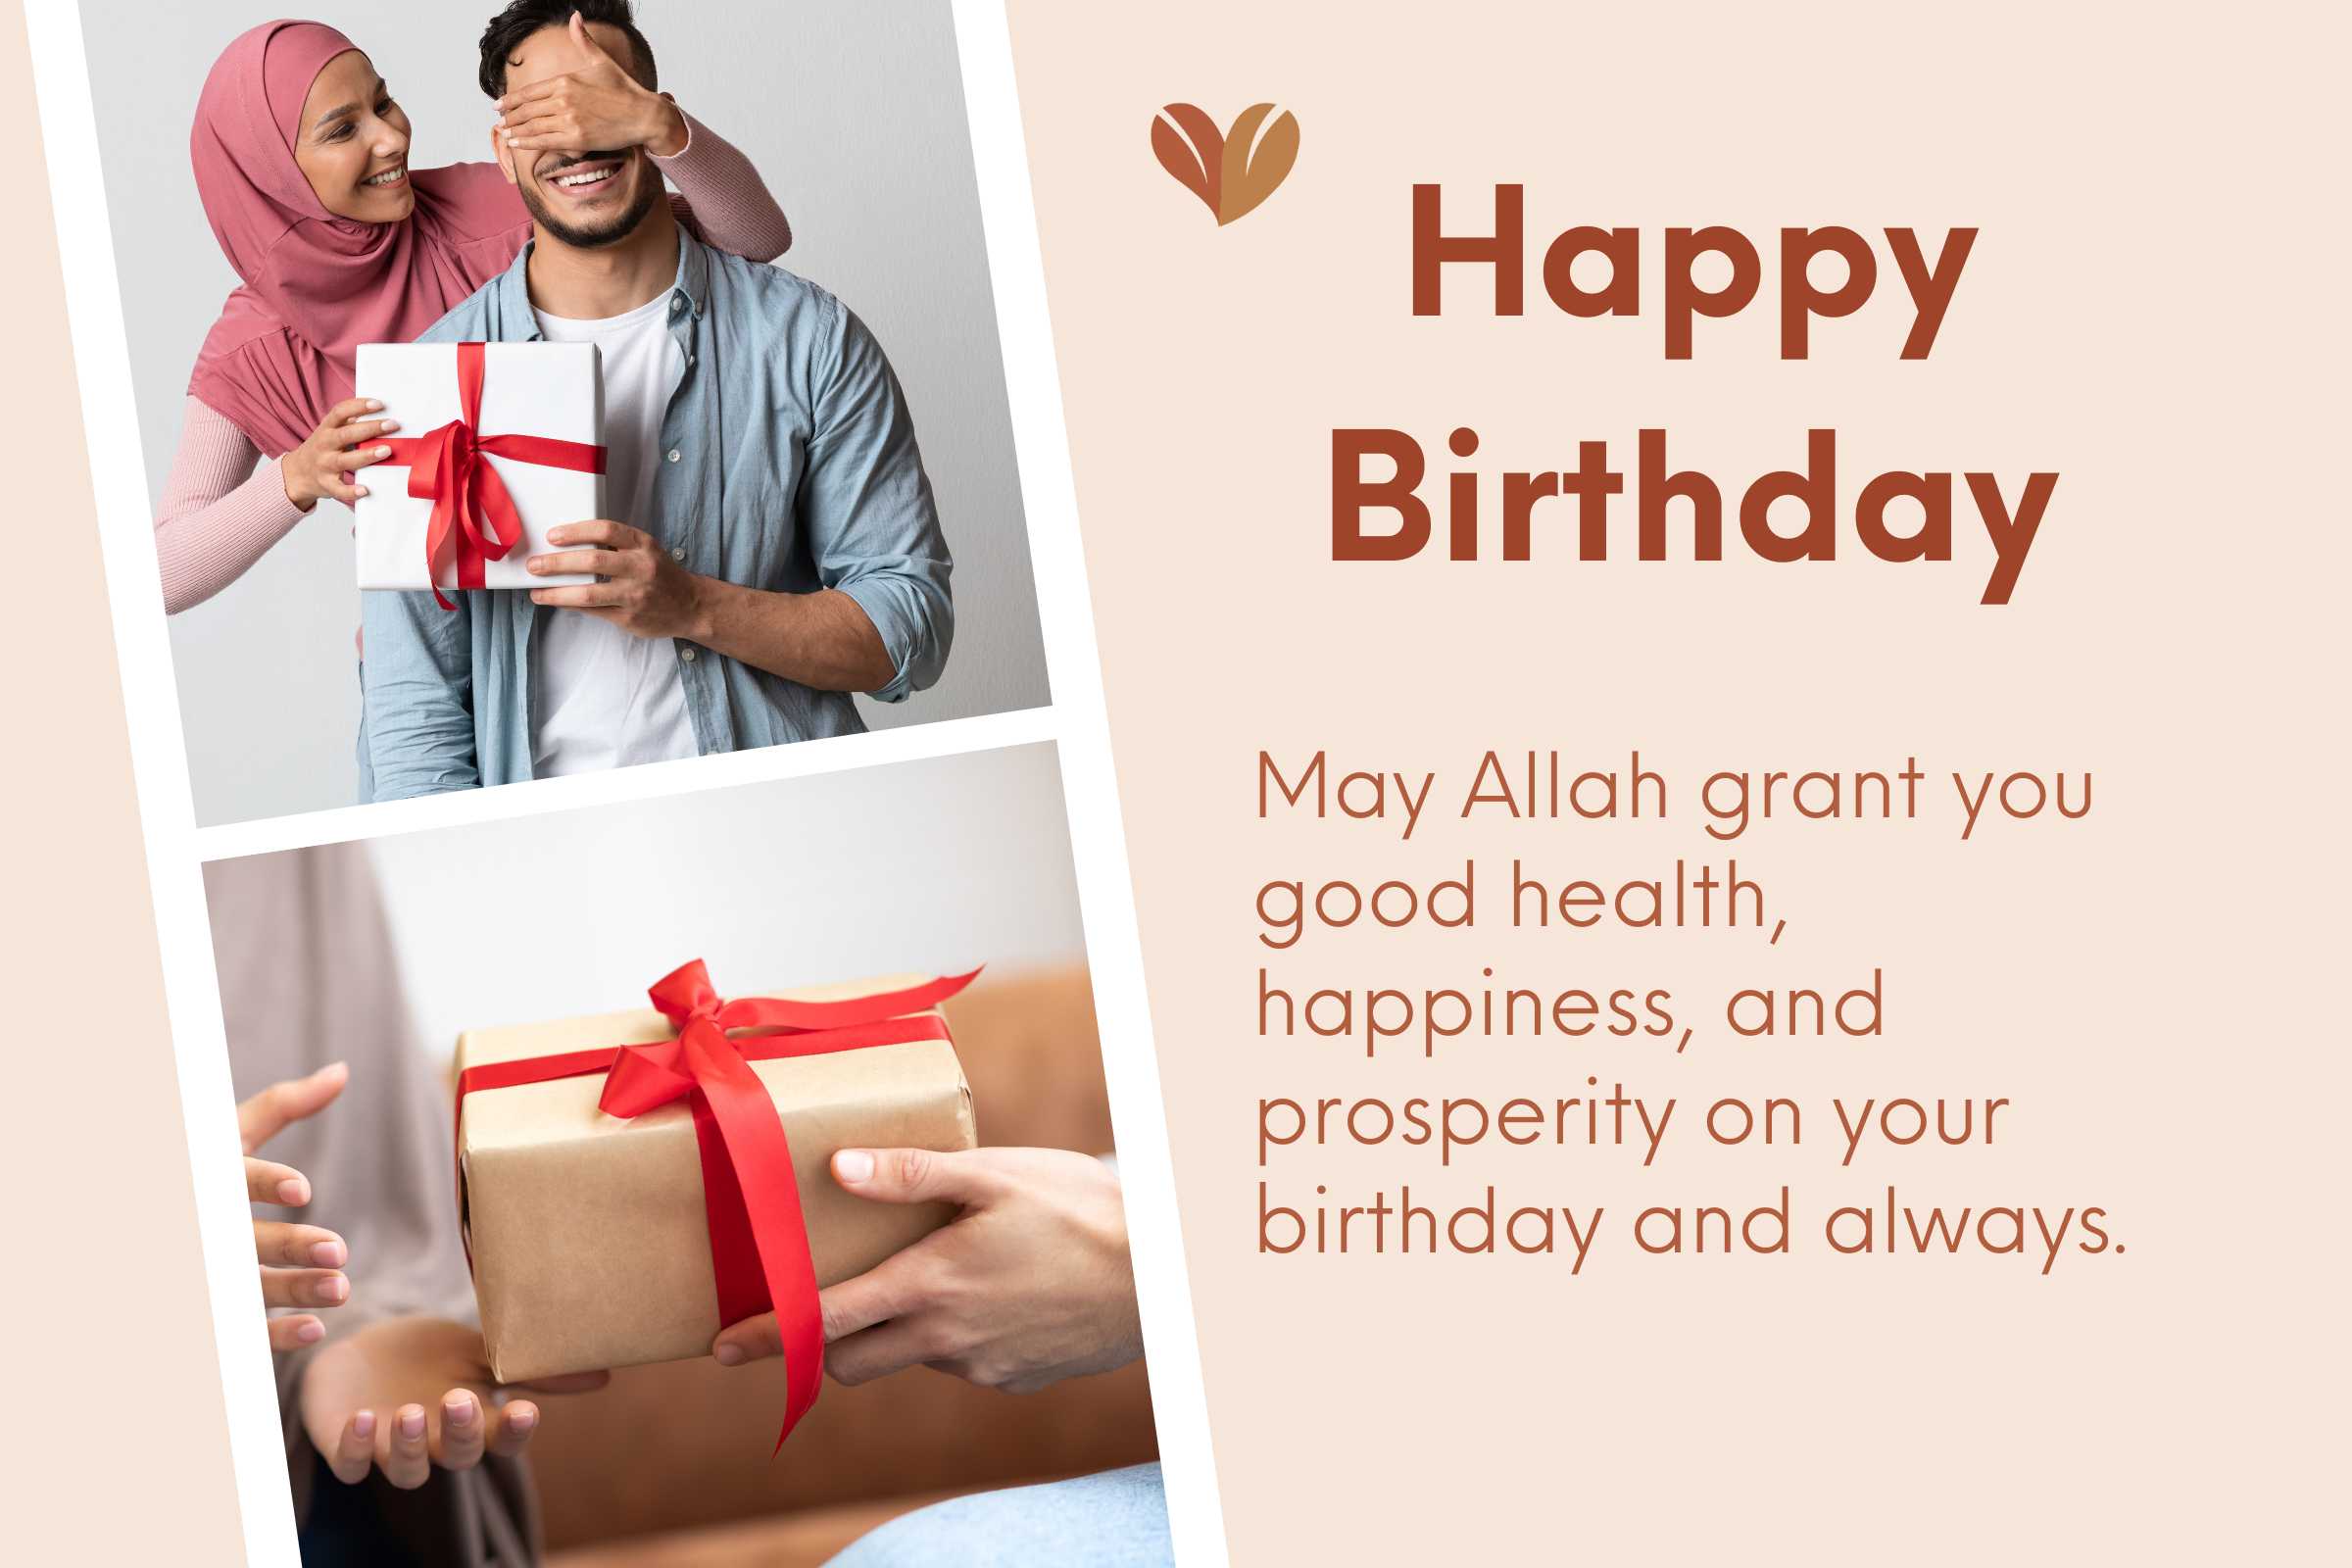 Sending heartfelt Islamic birthday wishes filled with Allah's love